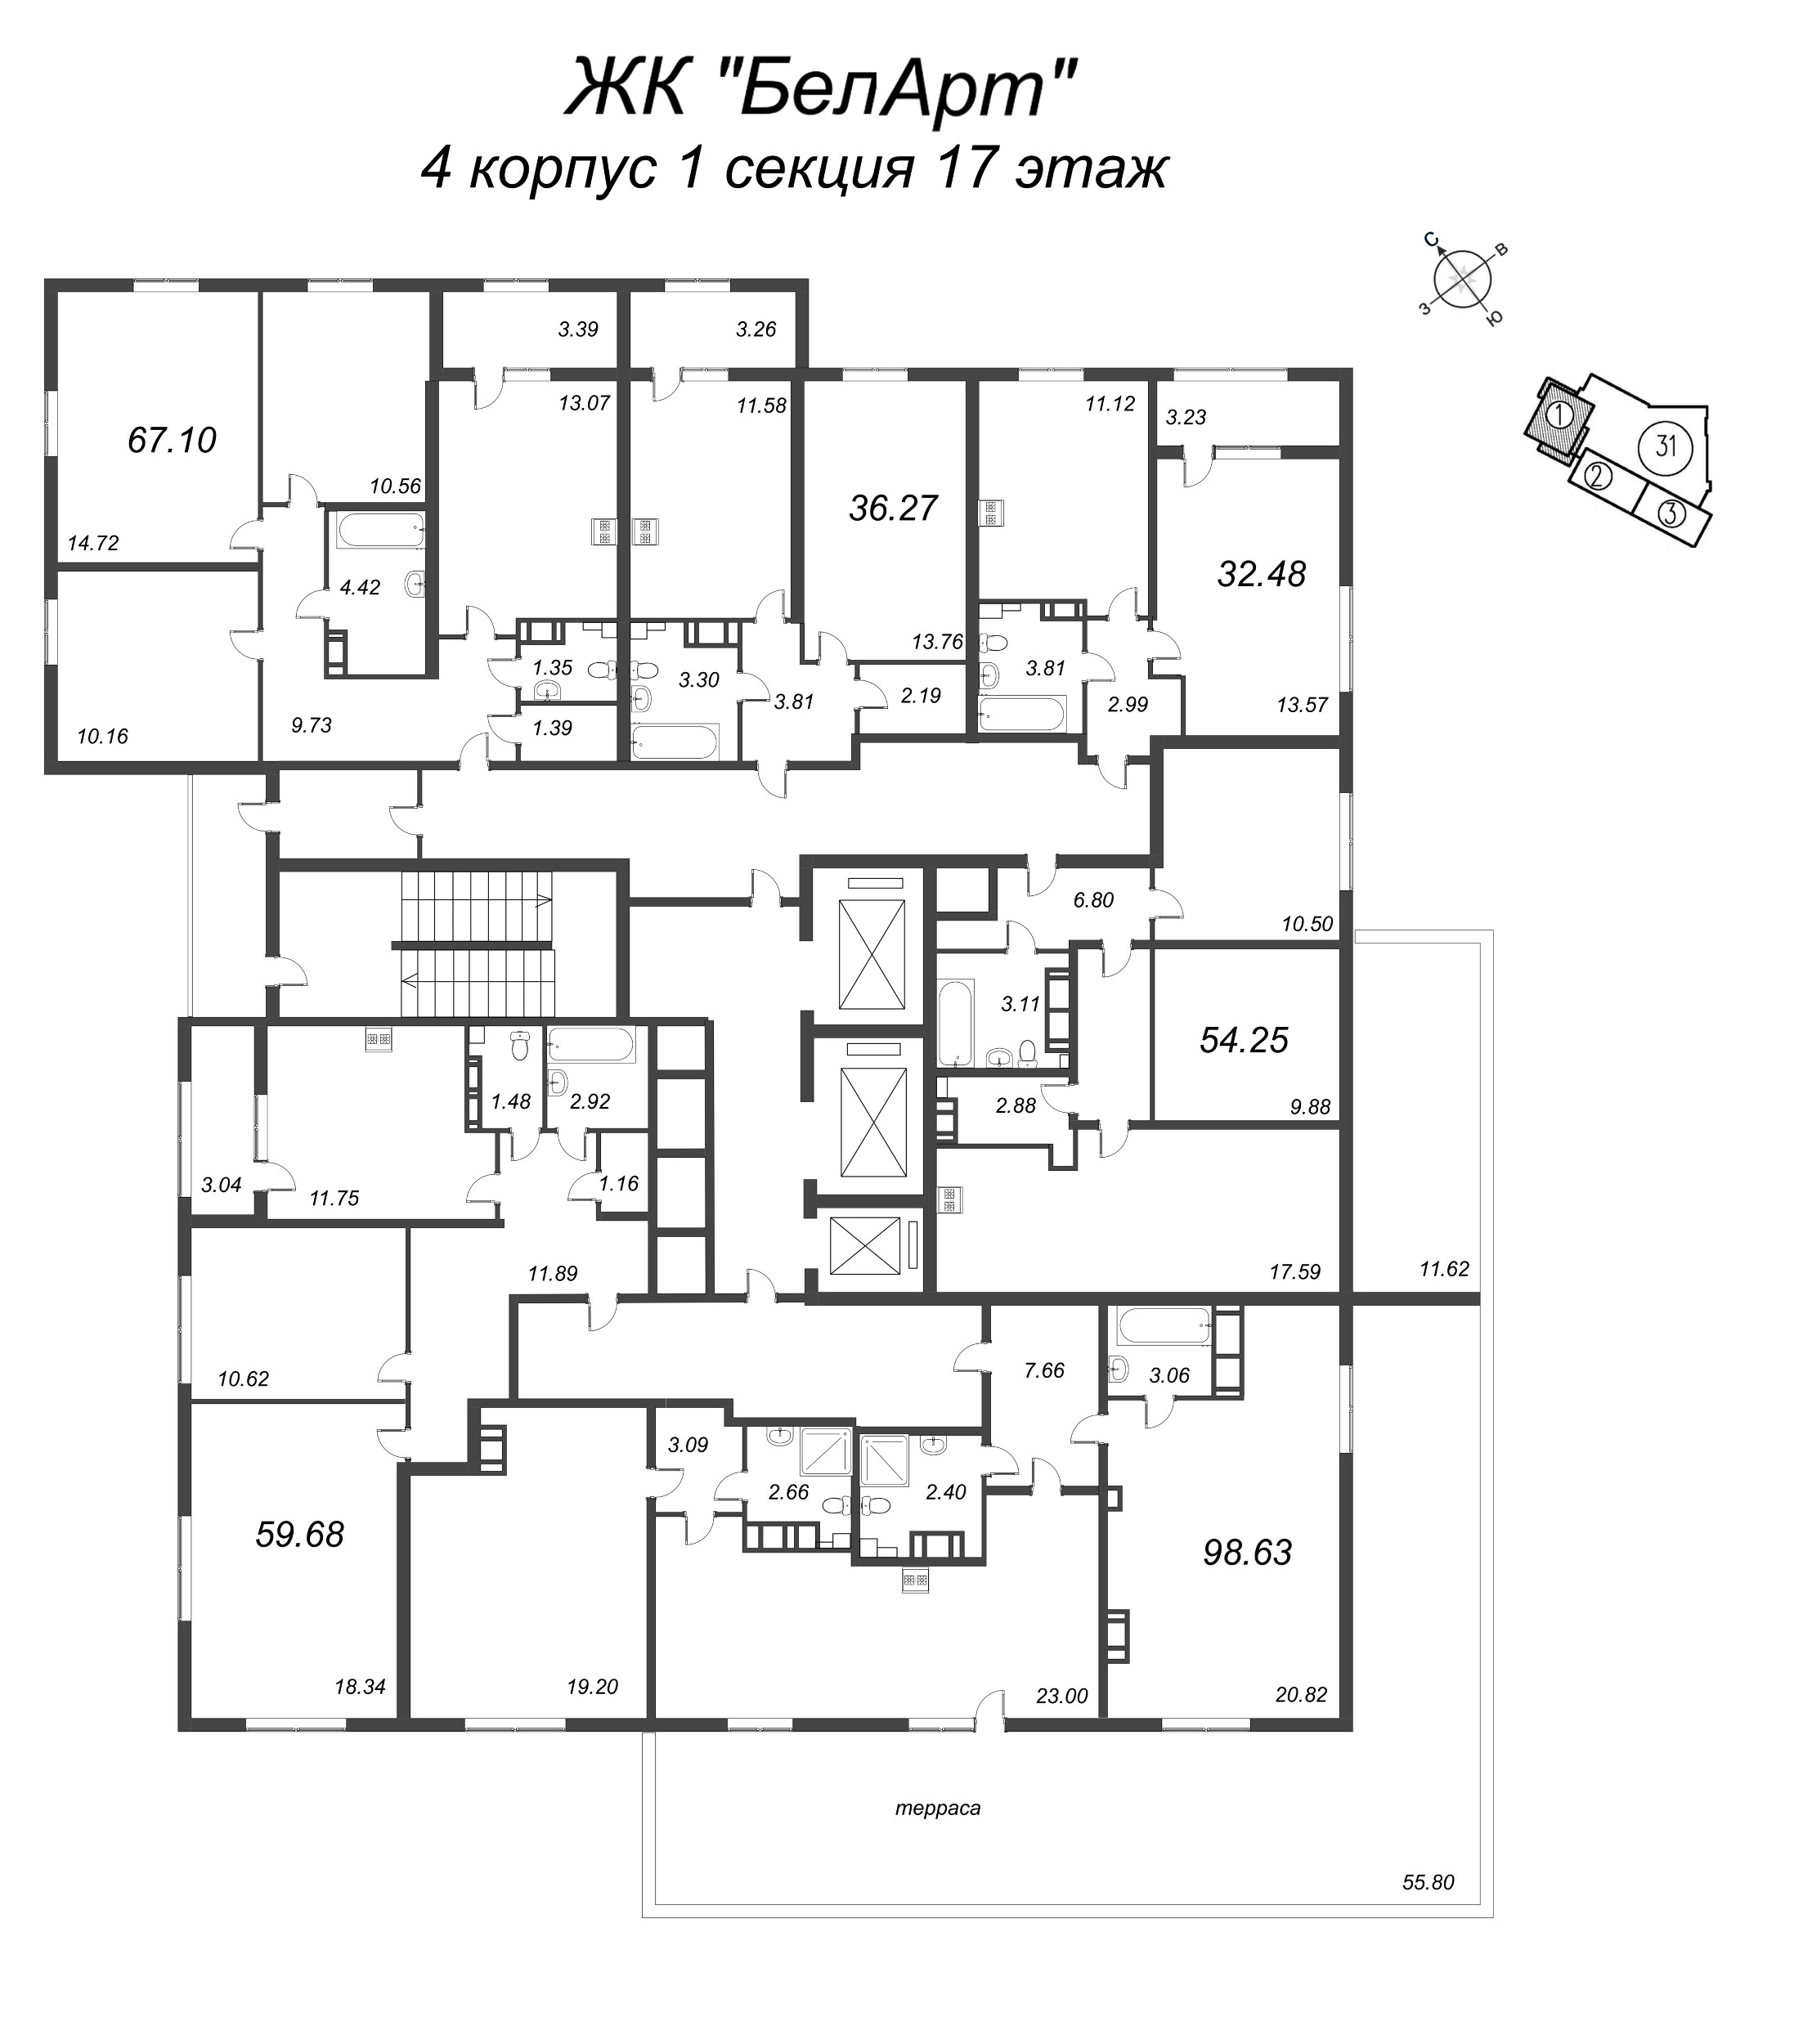 3-комнатная (Евро) квартира, 54.25 м² - планировка этажа